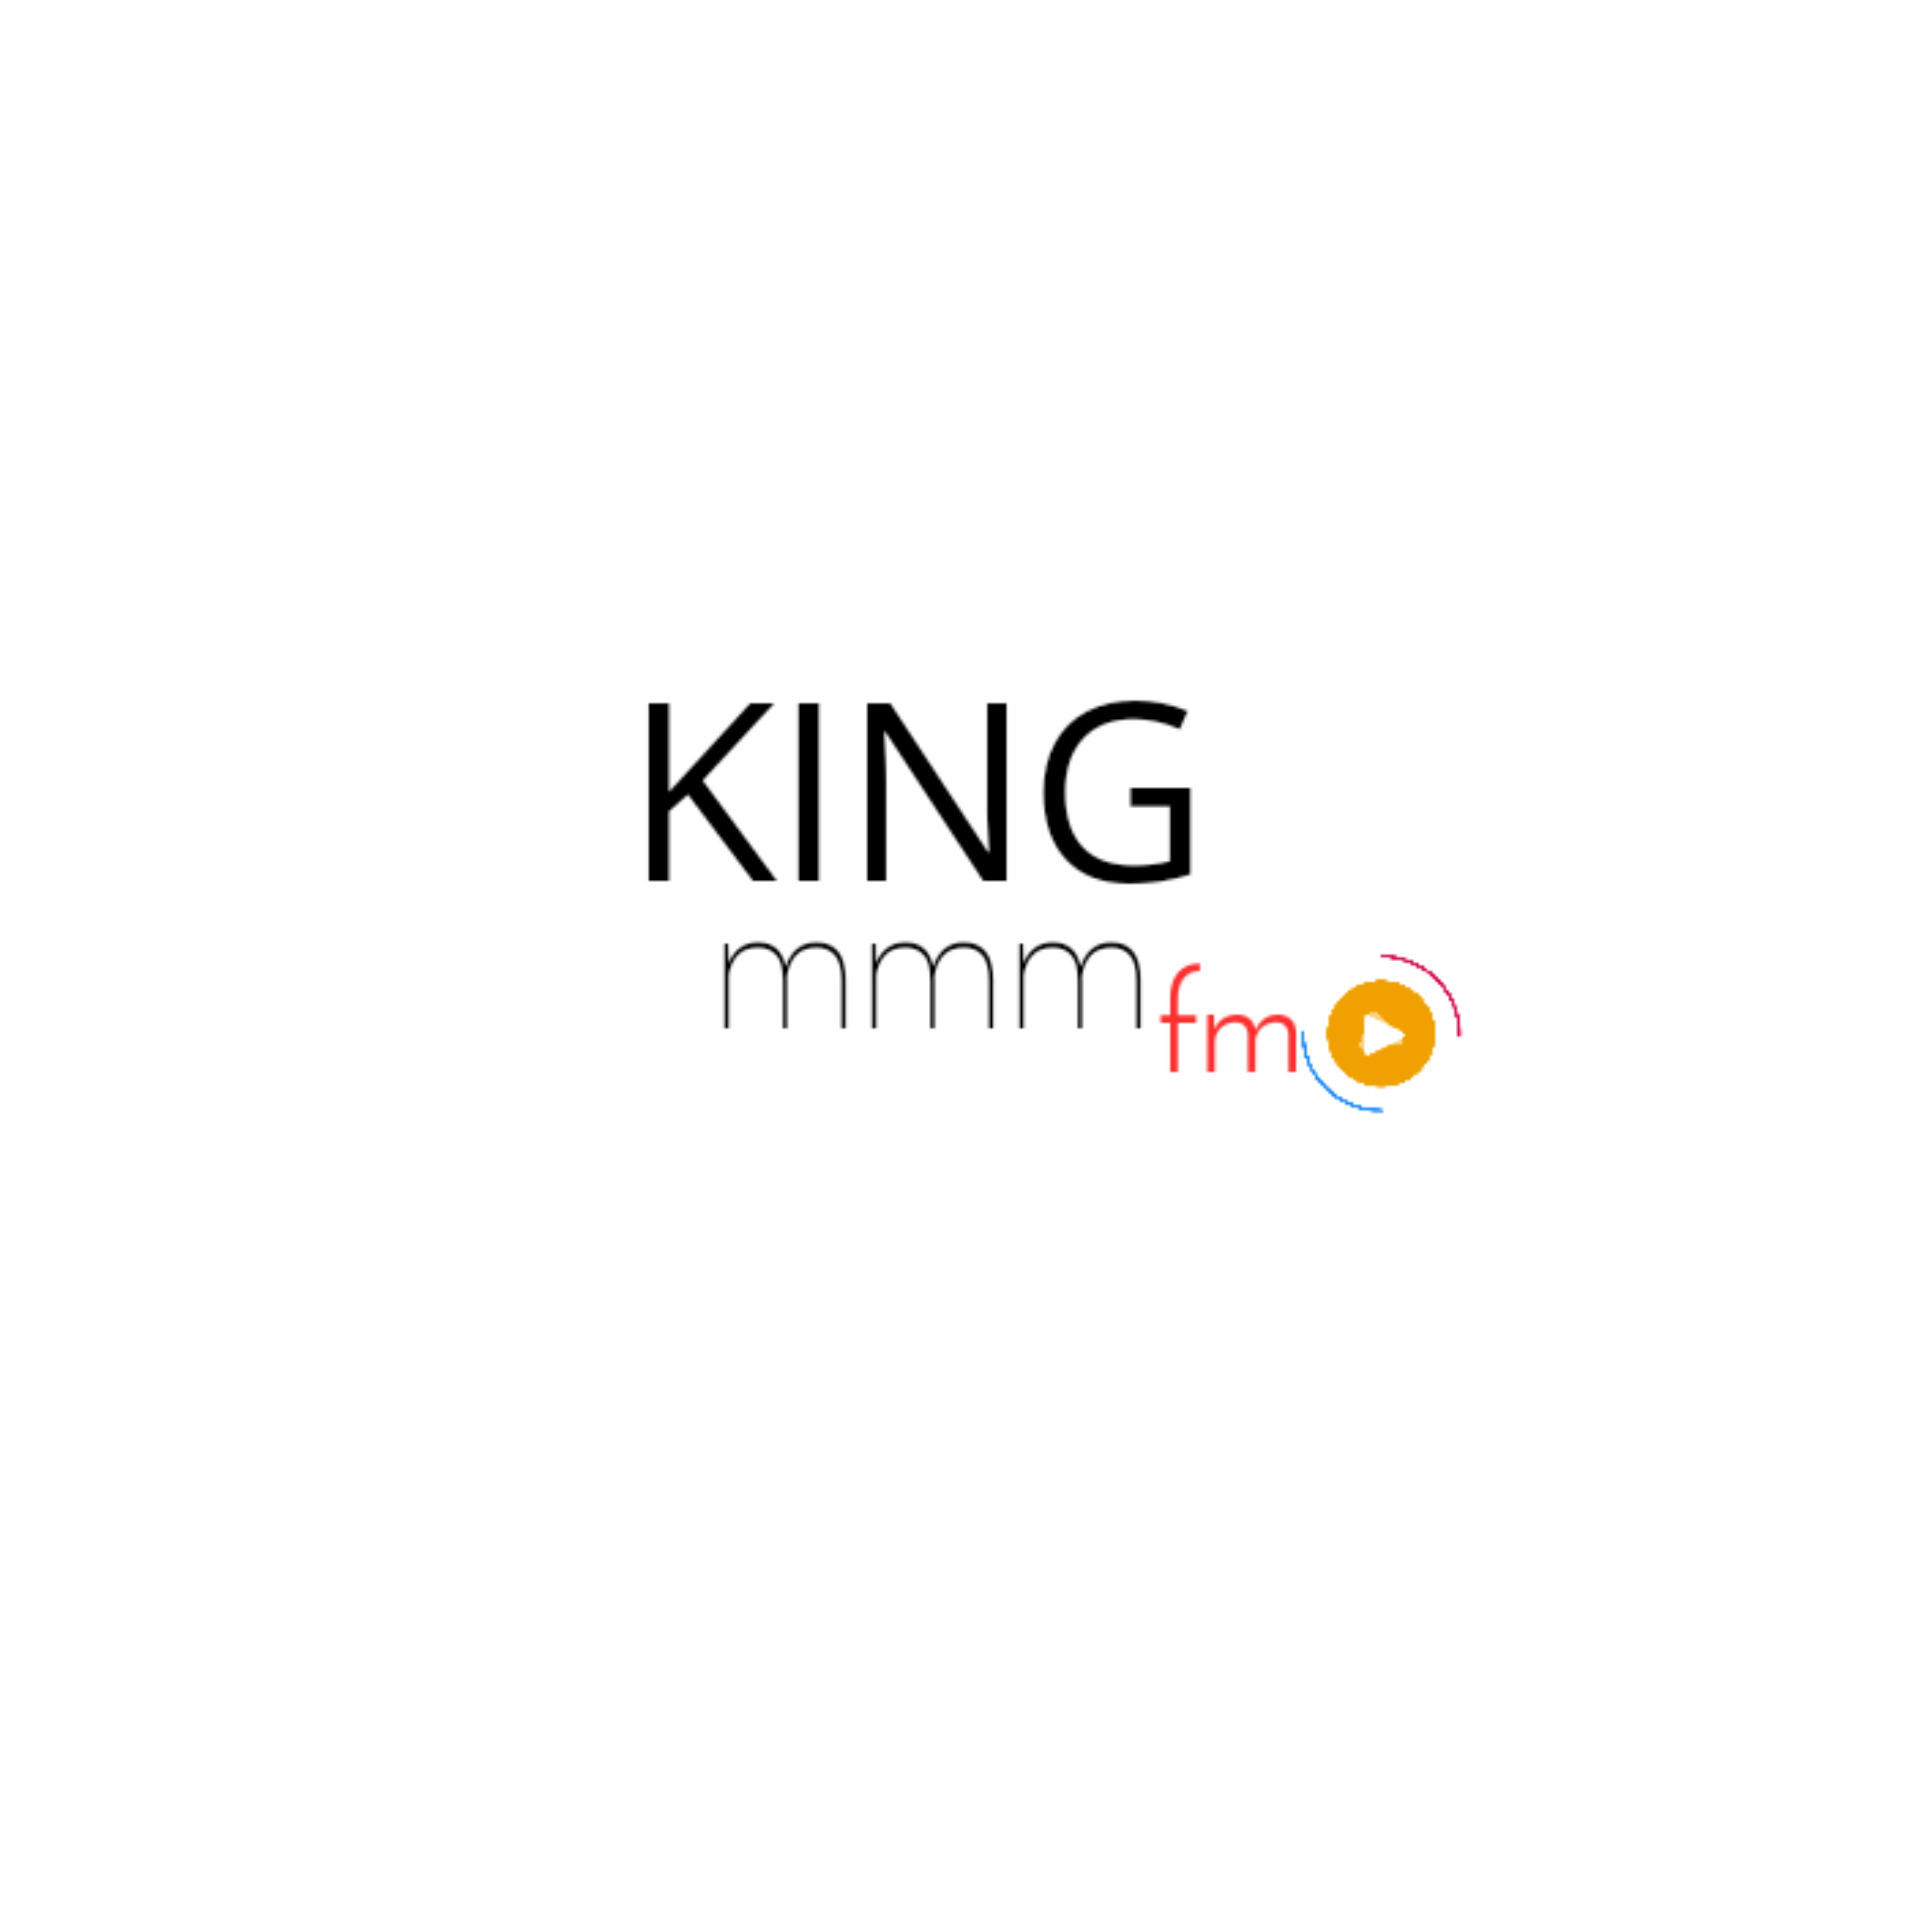 KING mmm fm